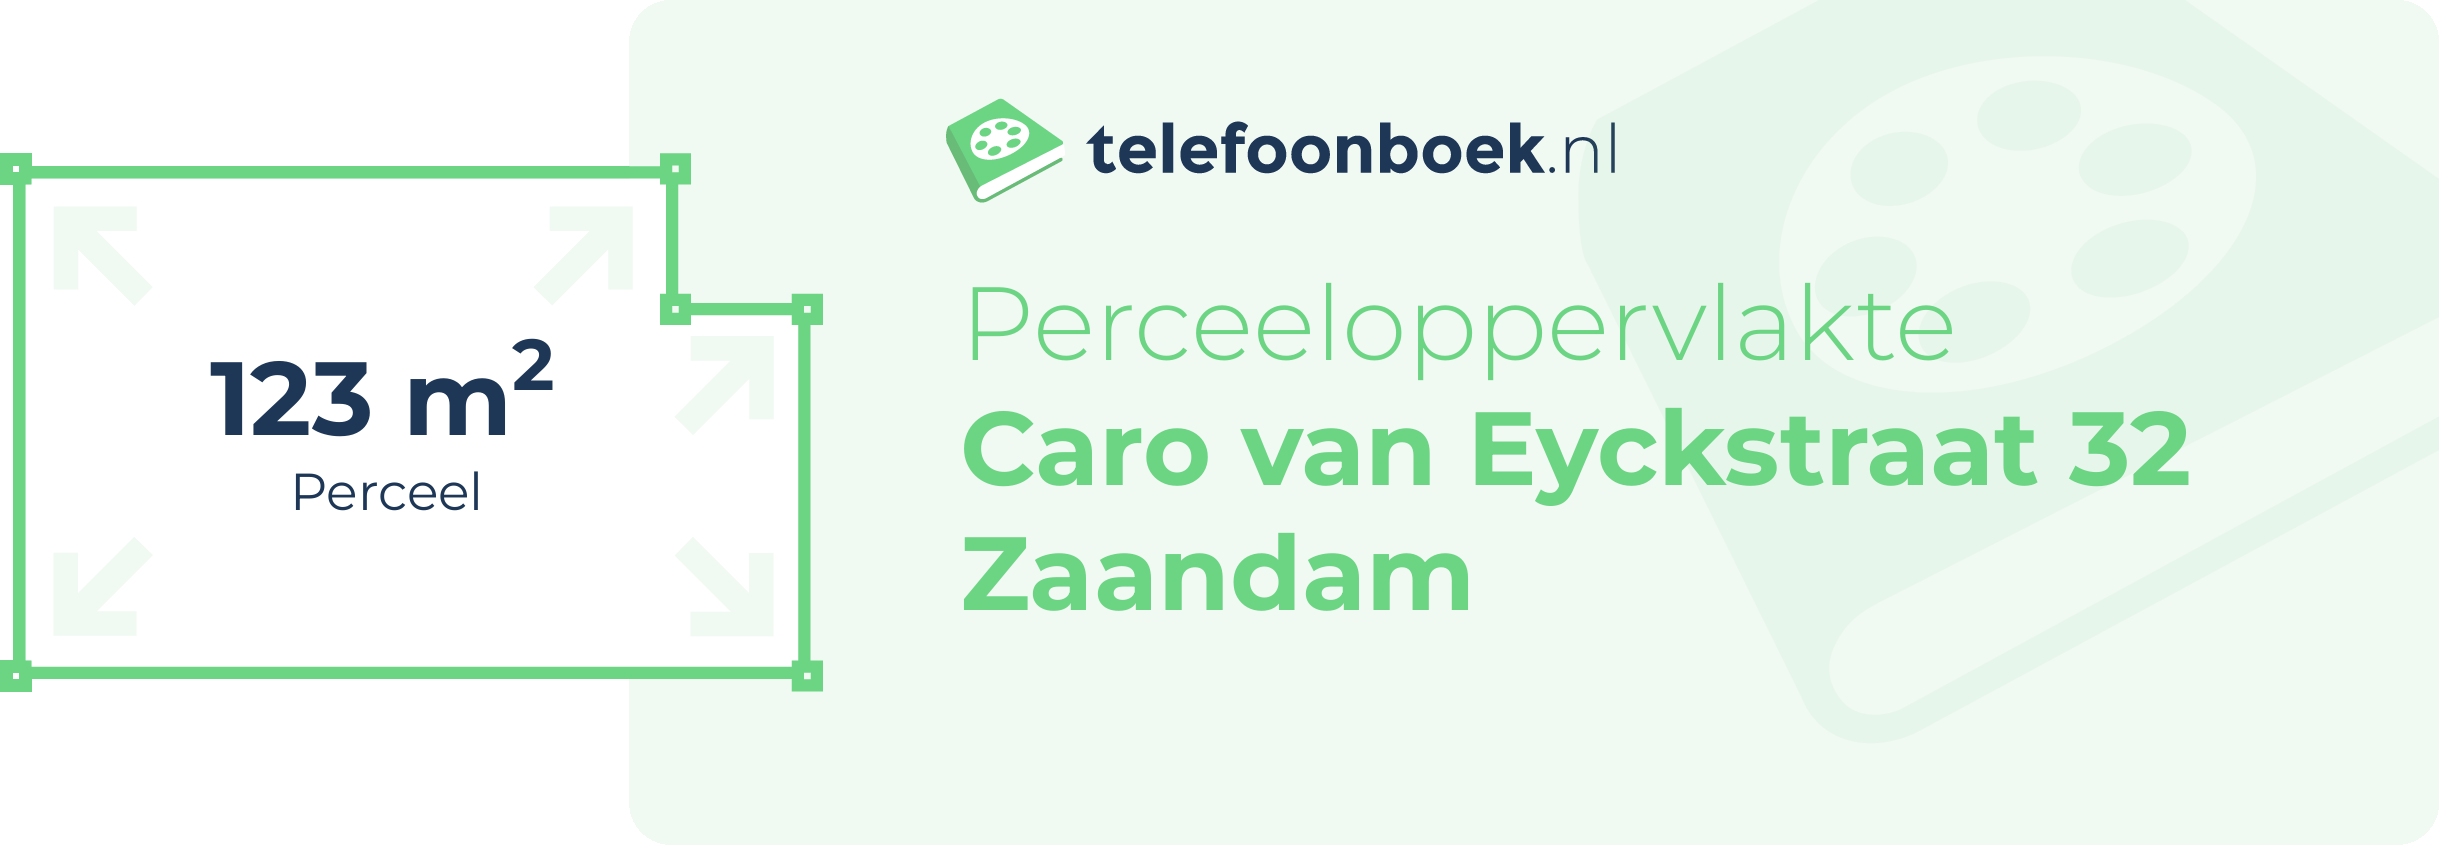 Perceeloppervlakte Caro Van Eyckstraat 32 Zaandam